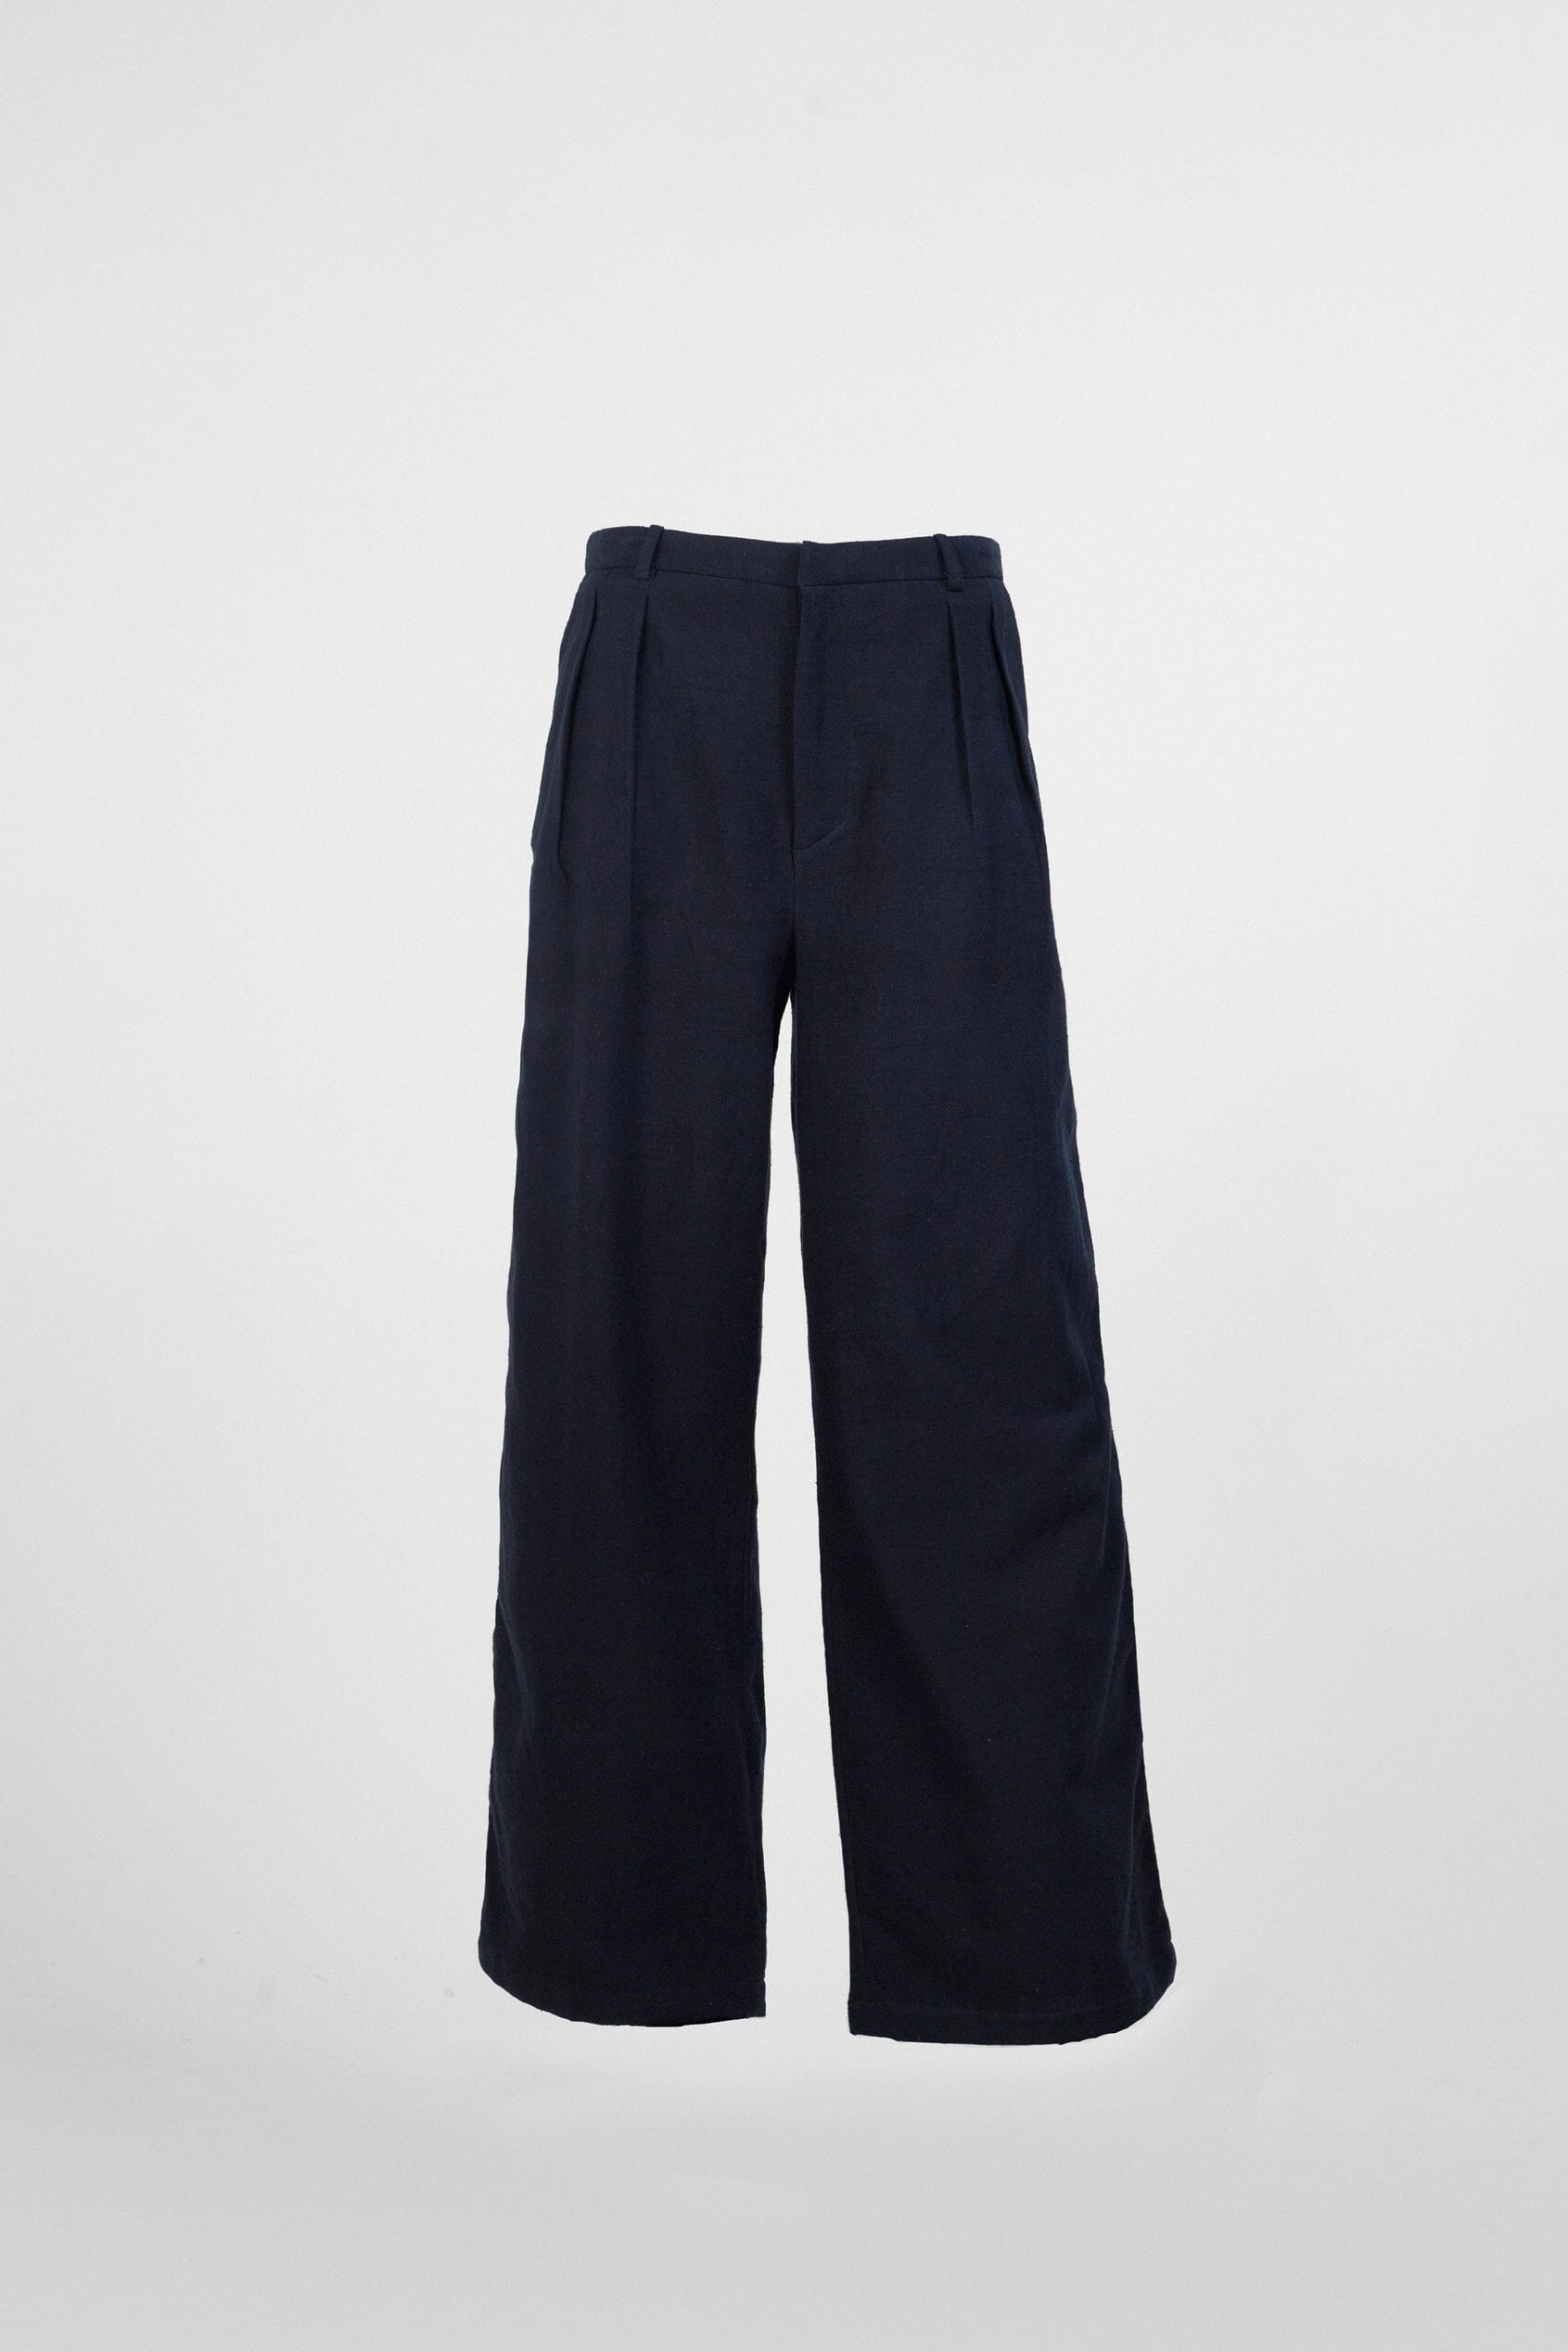 Stripe Seam Classic Wide Pants • Black Trousers New LaurenceAirline 